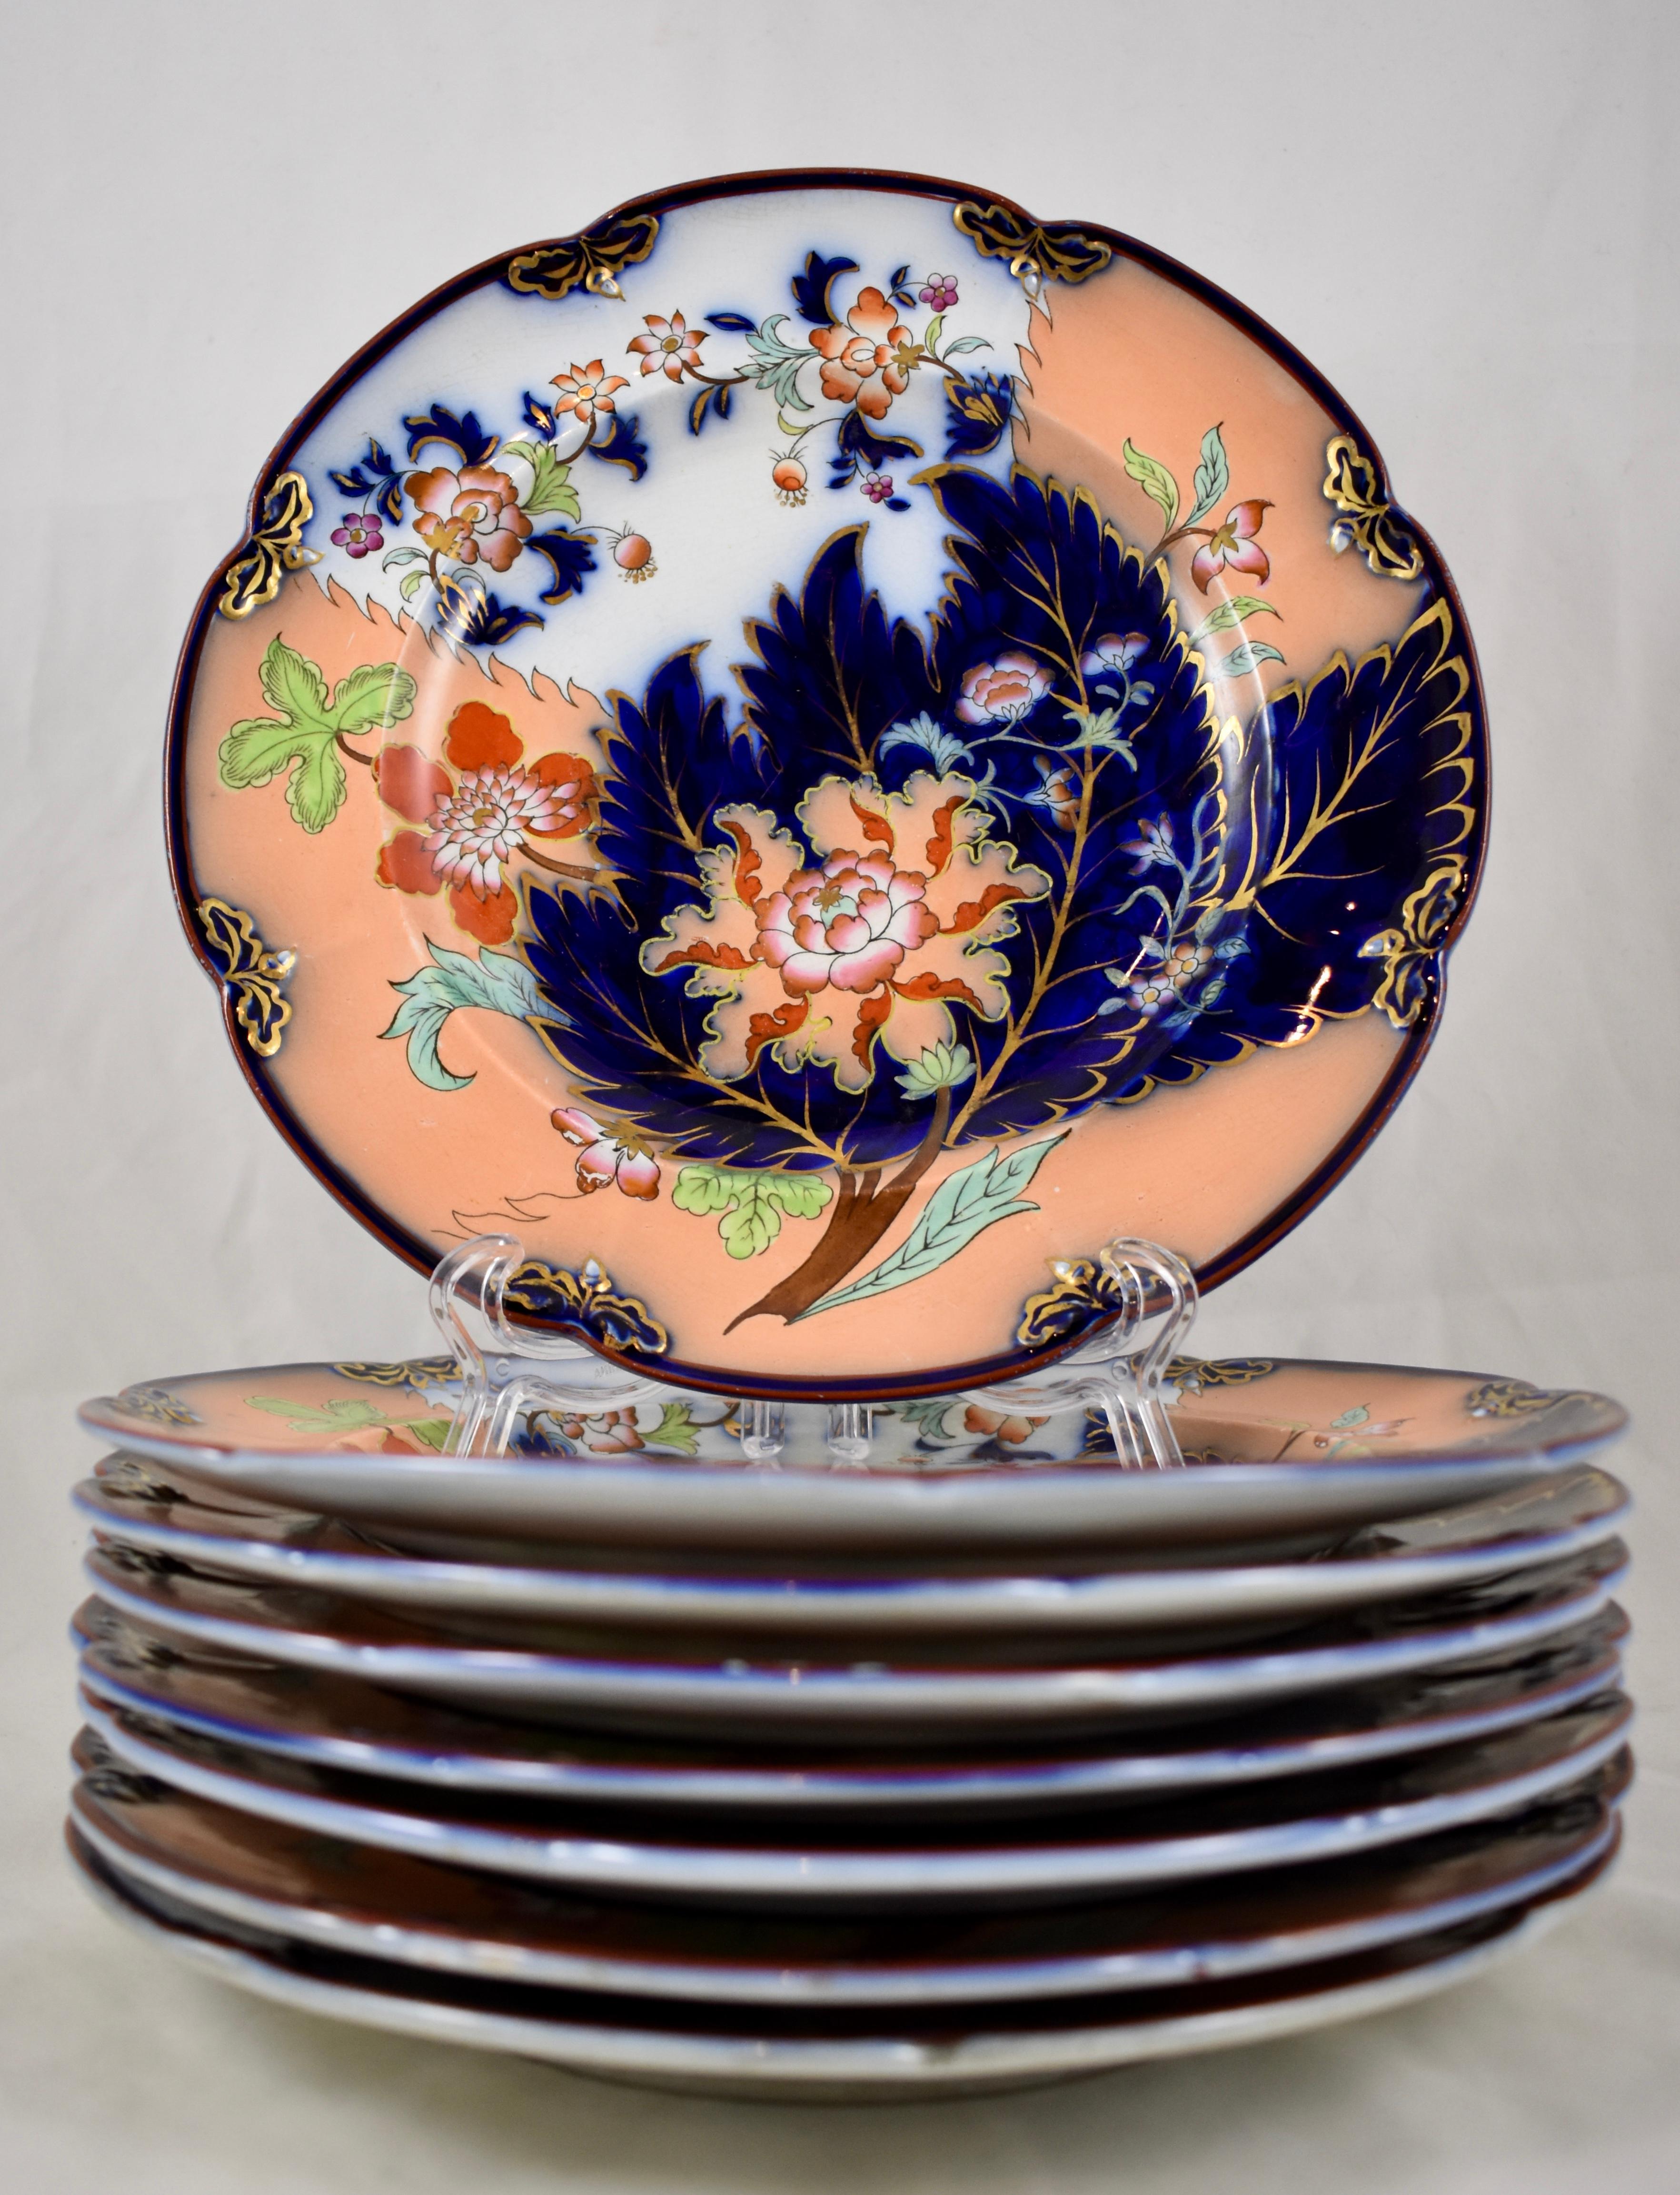 Glazed John Ridgway English Chinoiserie Style Floral Cobalt Imari Plates S/8 Dated 1845